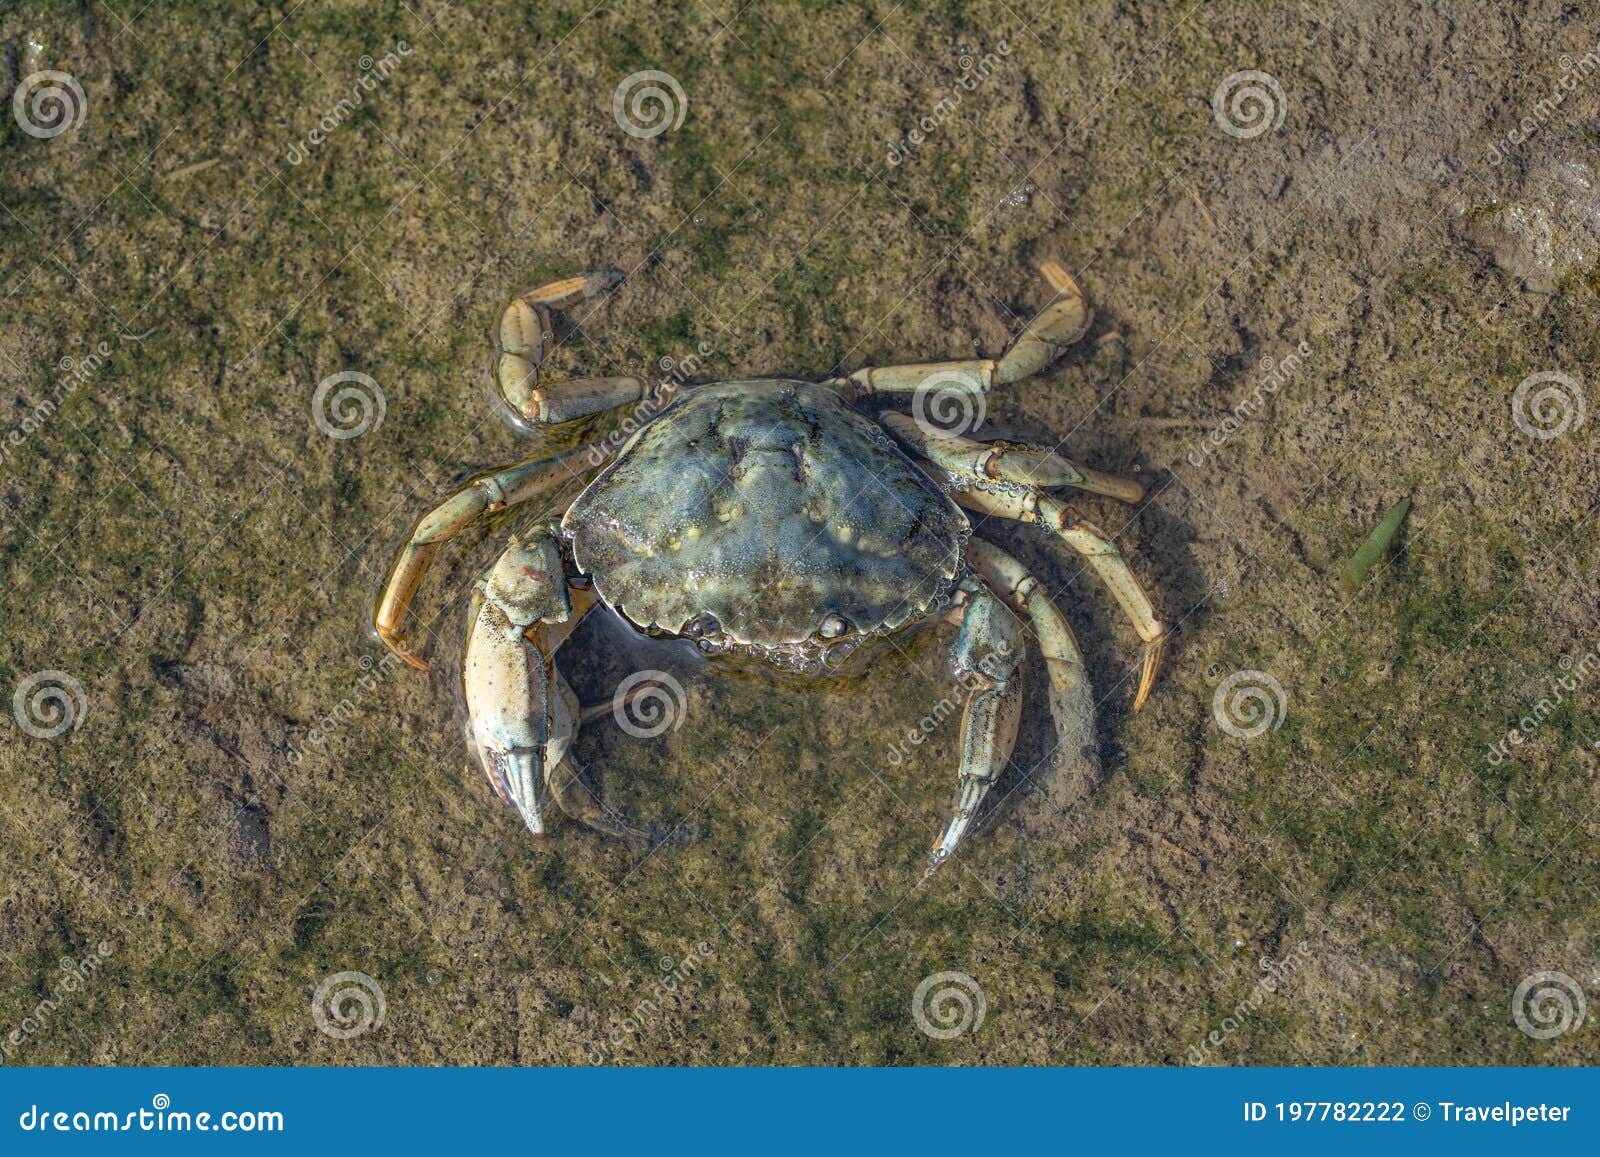 shore crab,north sea,north frisia,germany